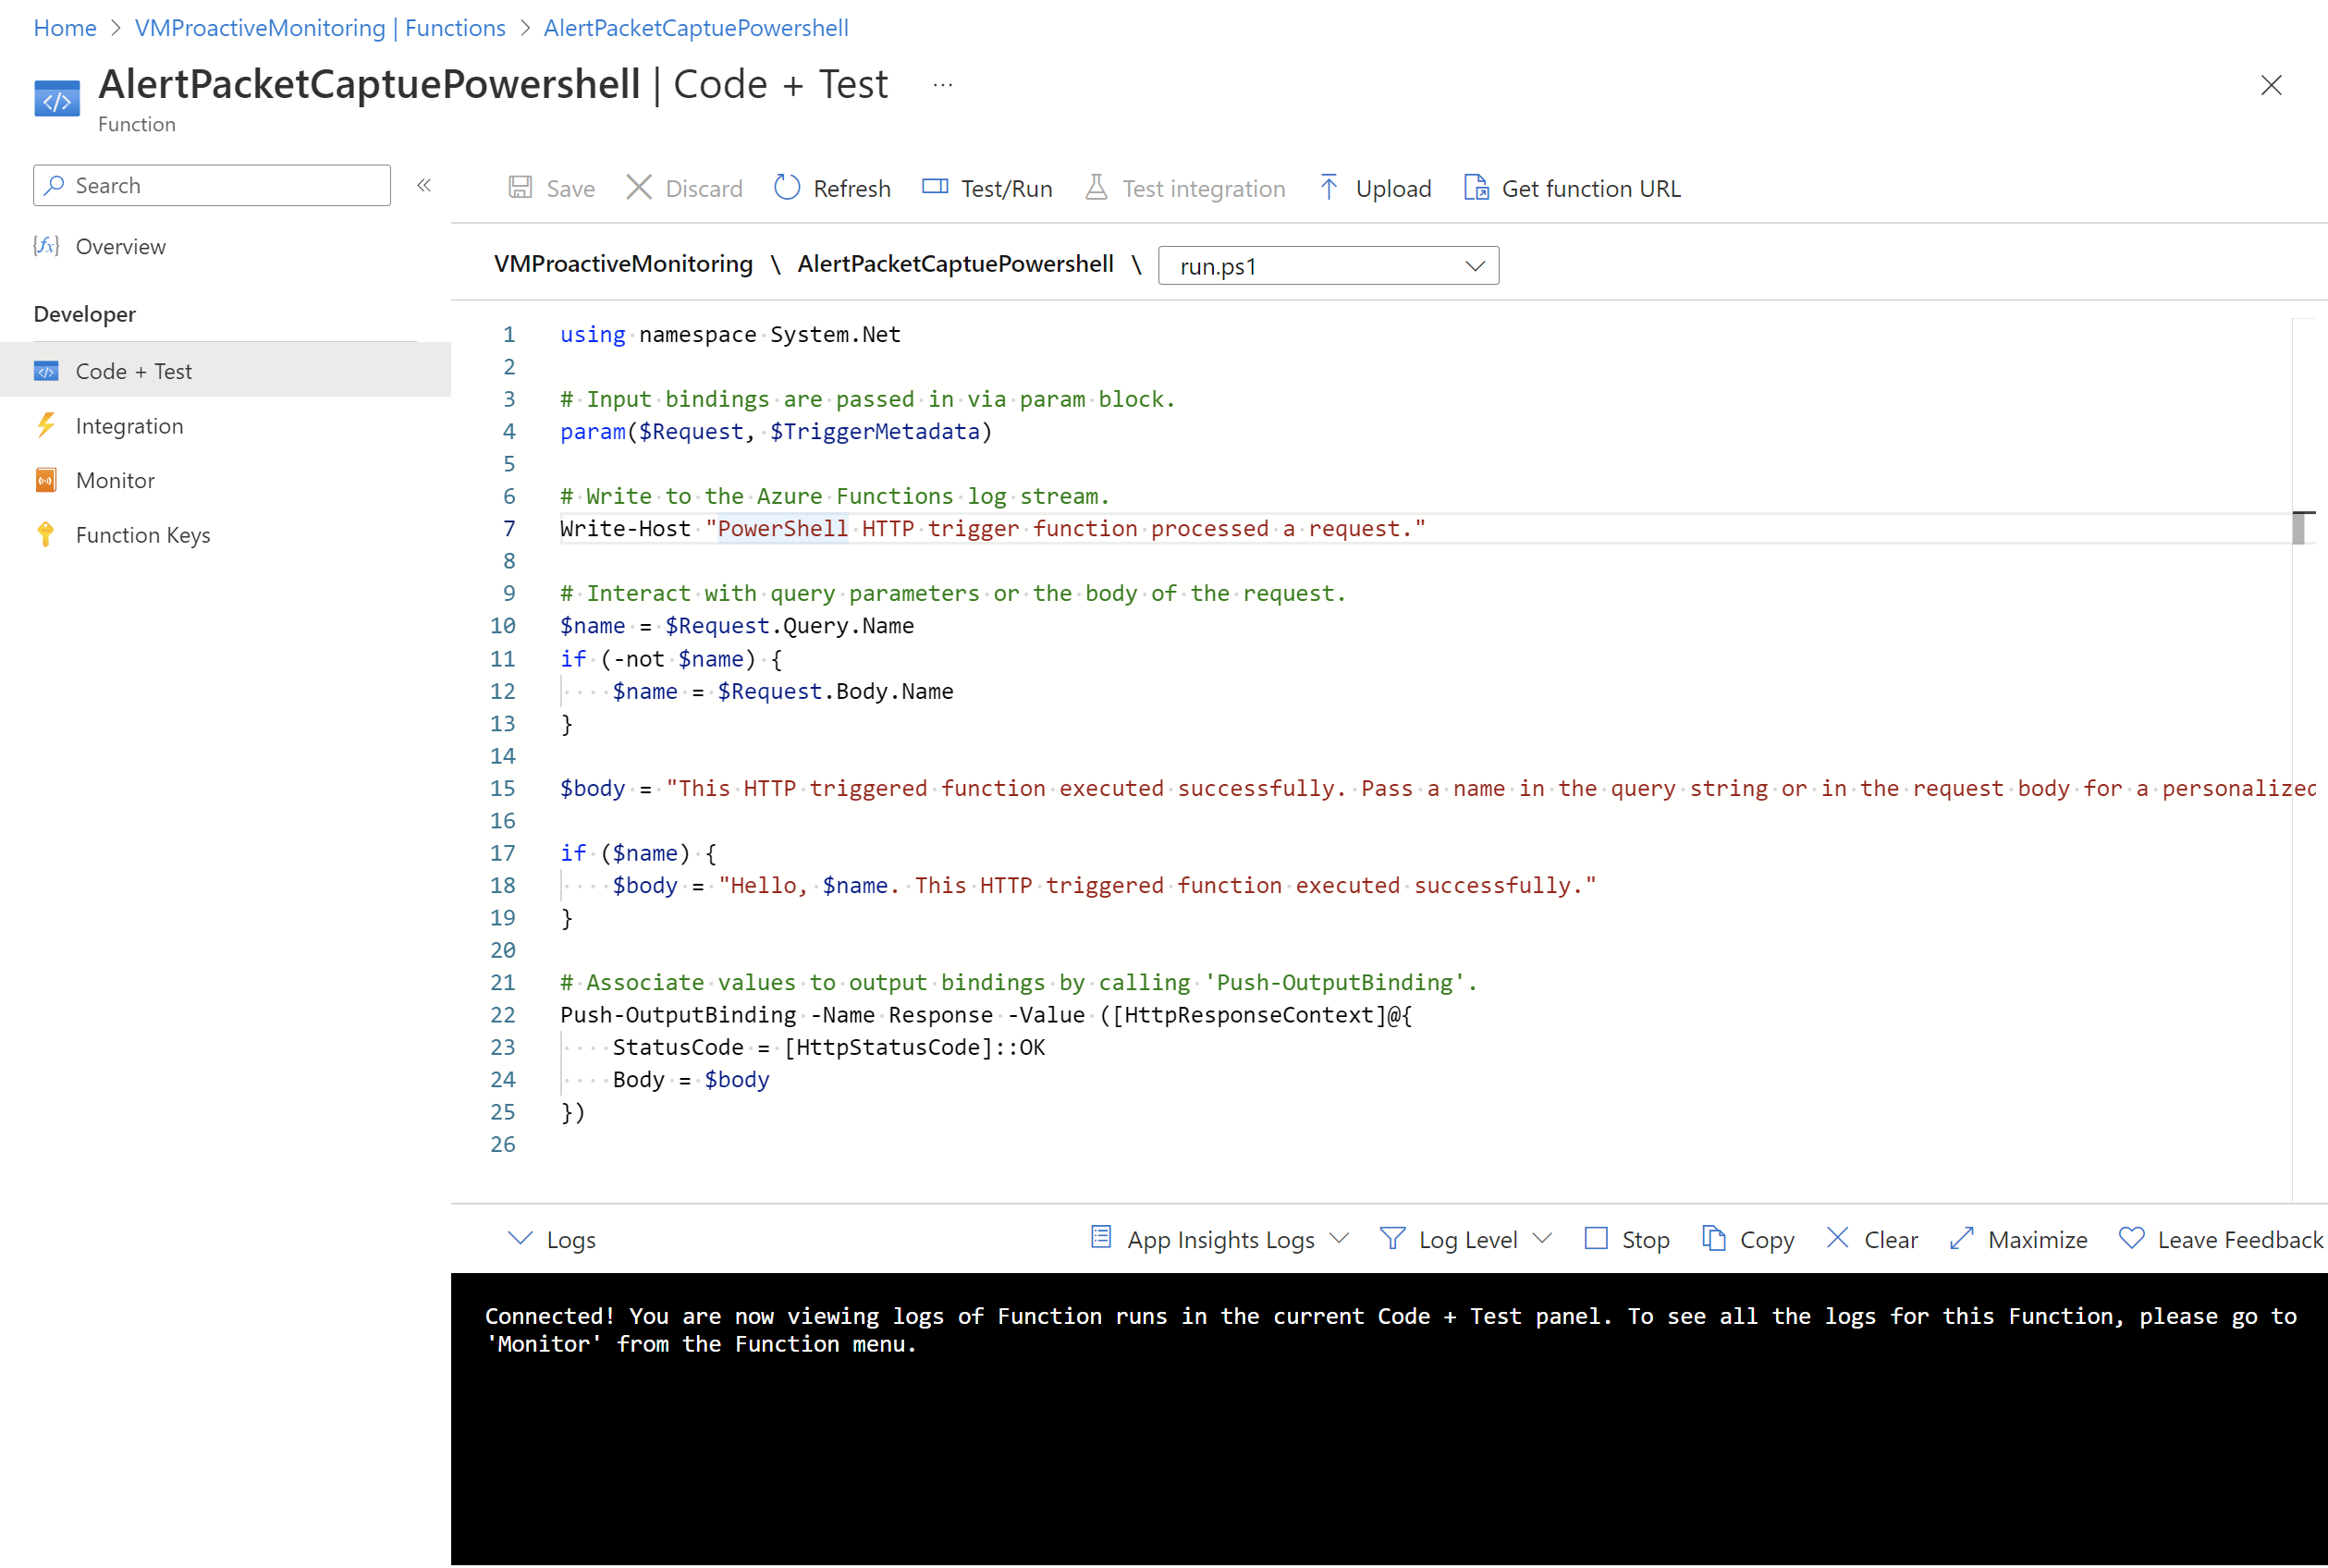 Screenshot of the Code + Test screen.